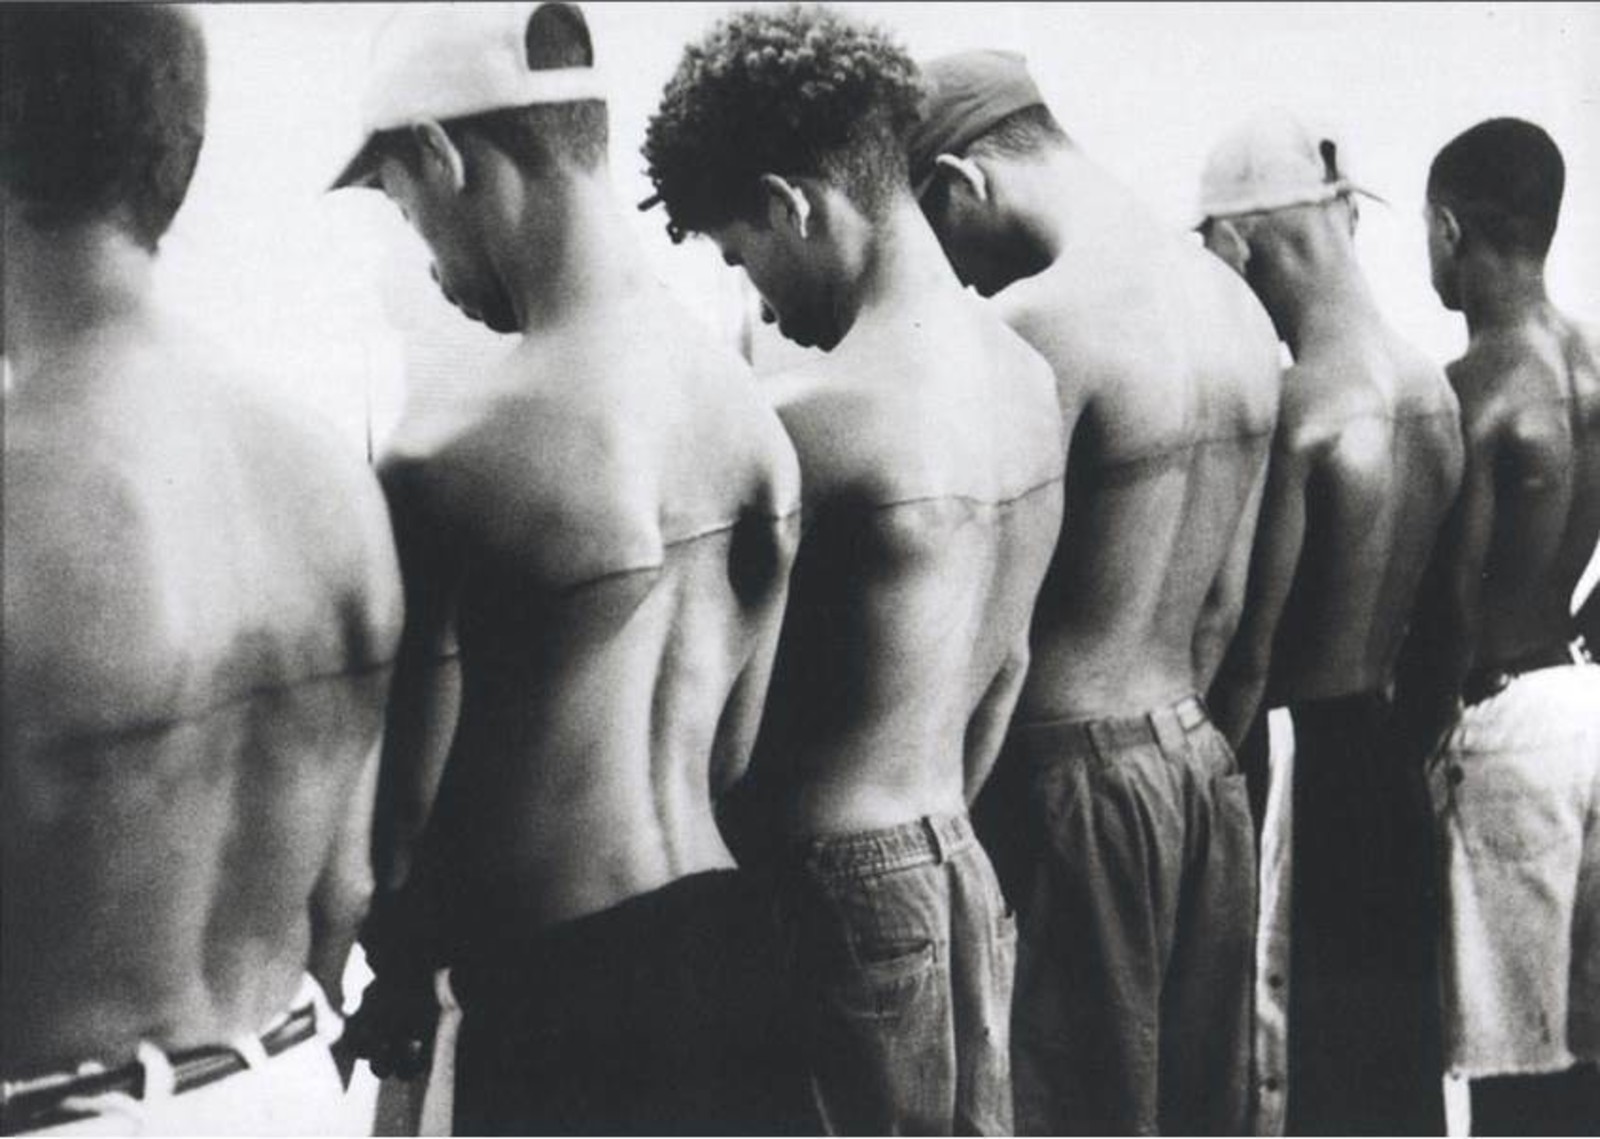 Santiago Sierra. Line. 1999. Tattoo across the backs of six people. 250 cm